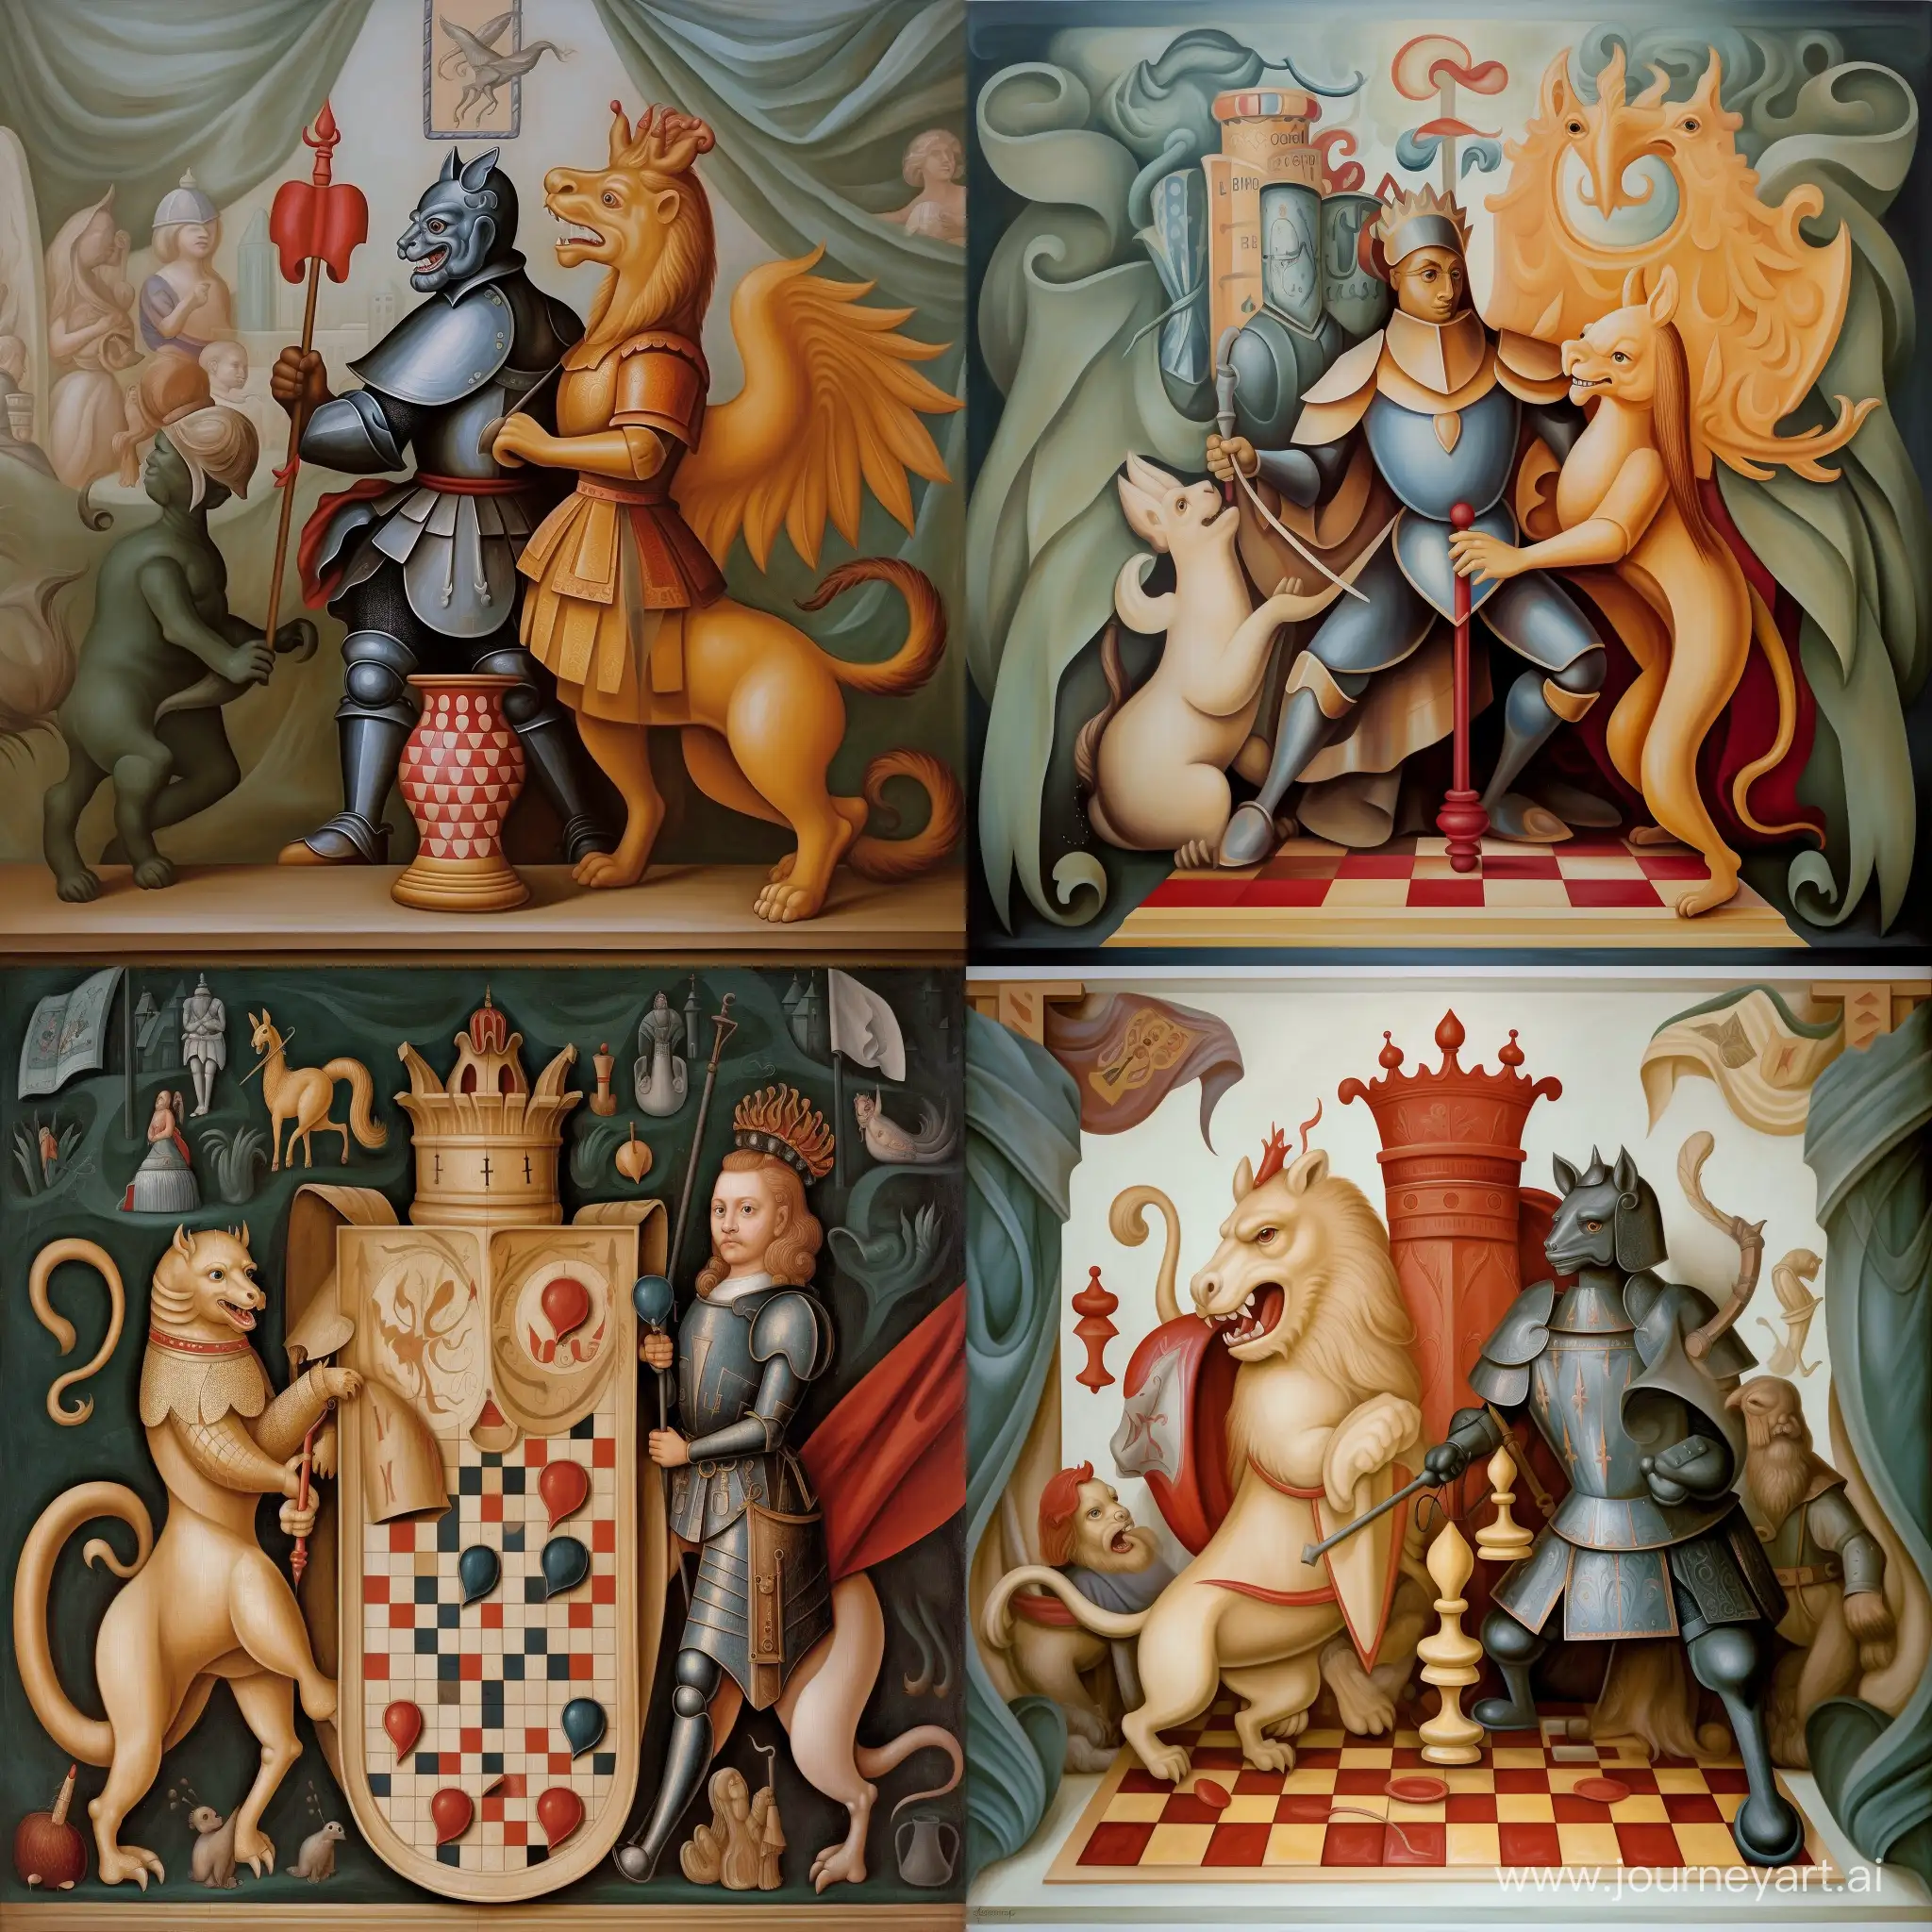 Renaissance-Clash-Knight-Dragon-and-Symbolism-of-Innovation-vs-Tradition